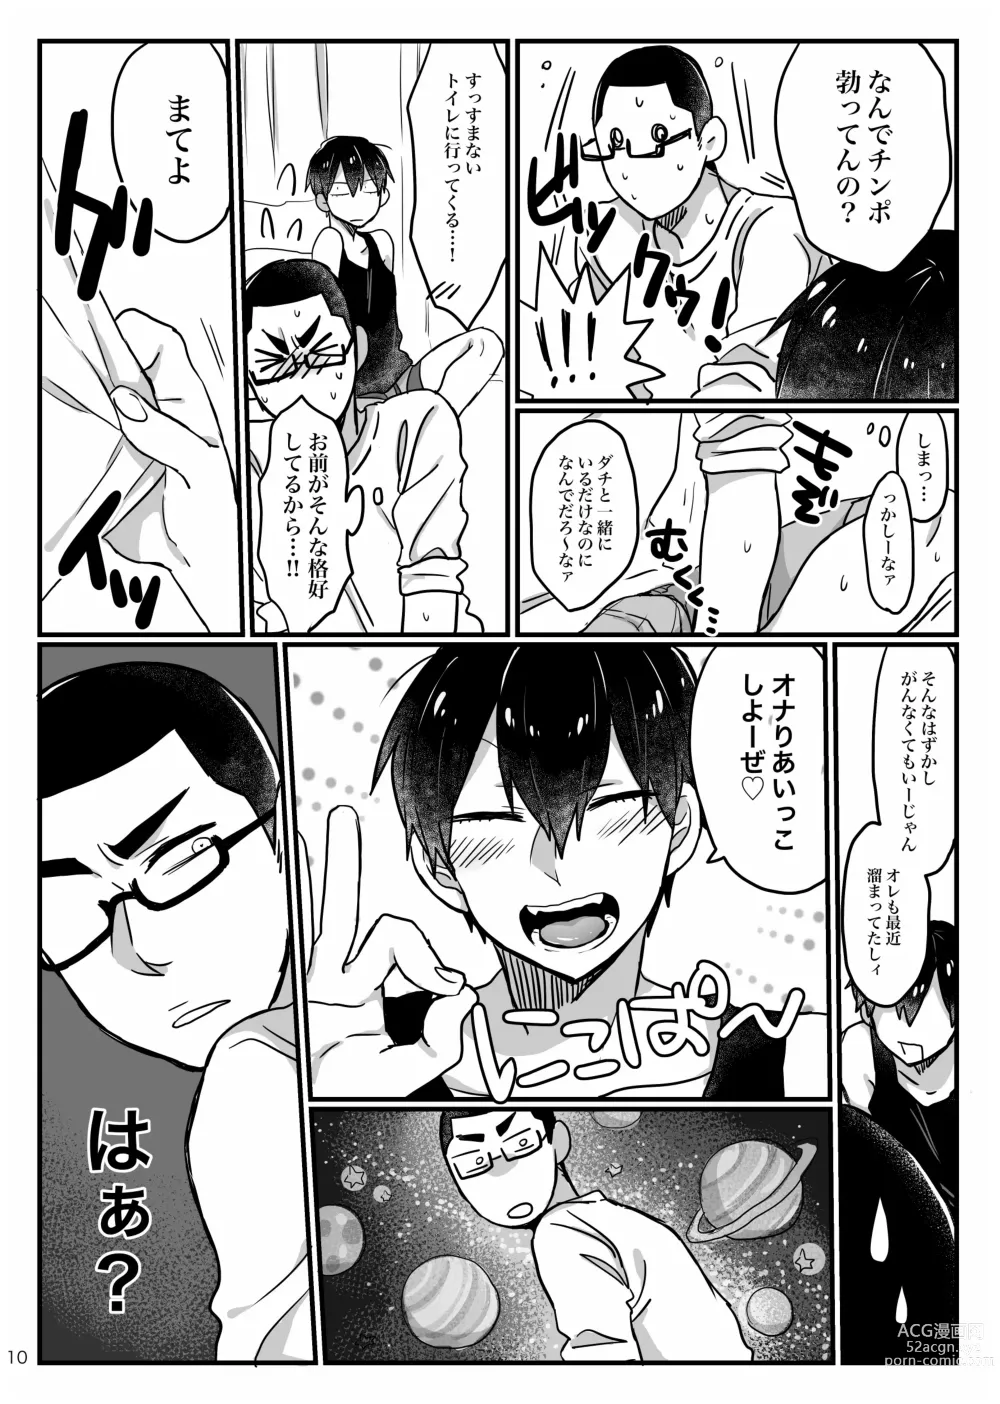 Page 8 of doujinshi Baby wo Namagoroshii!